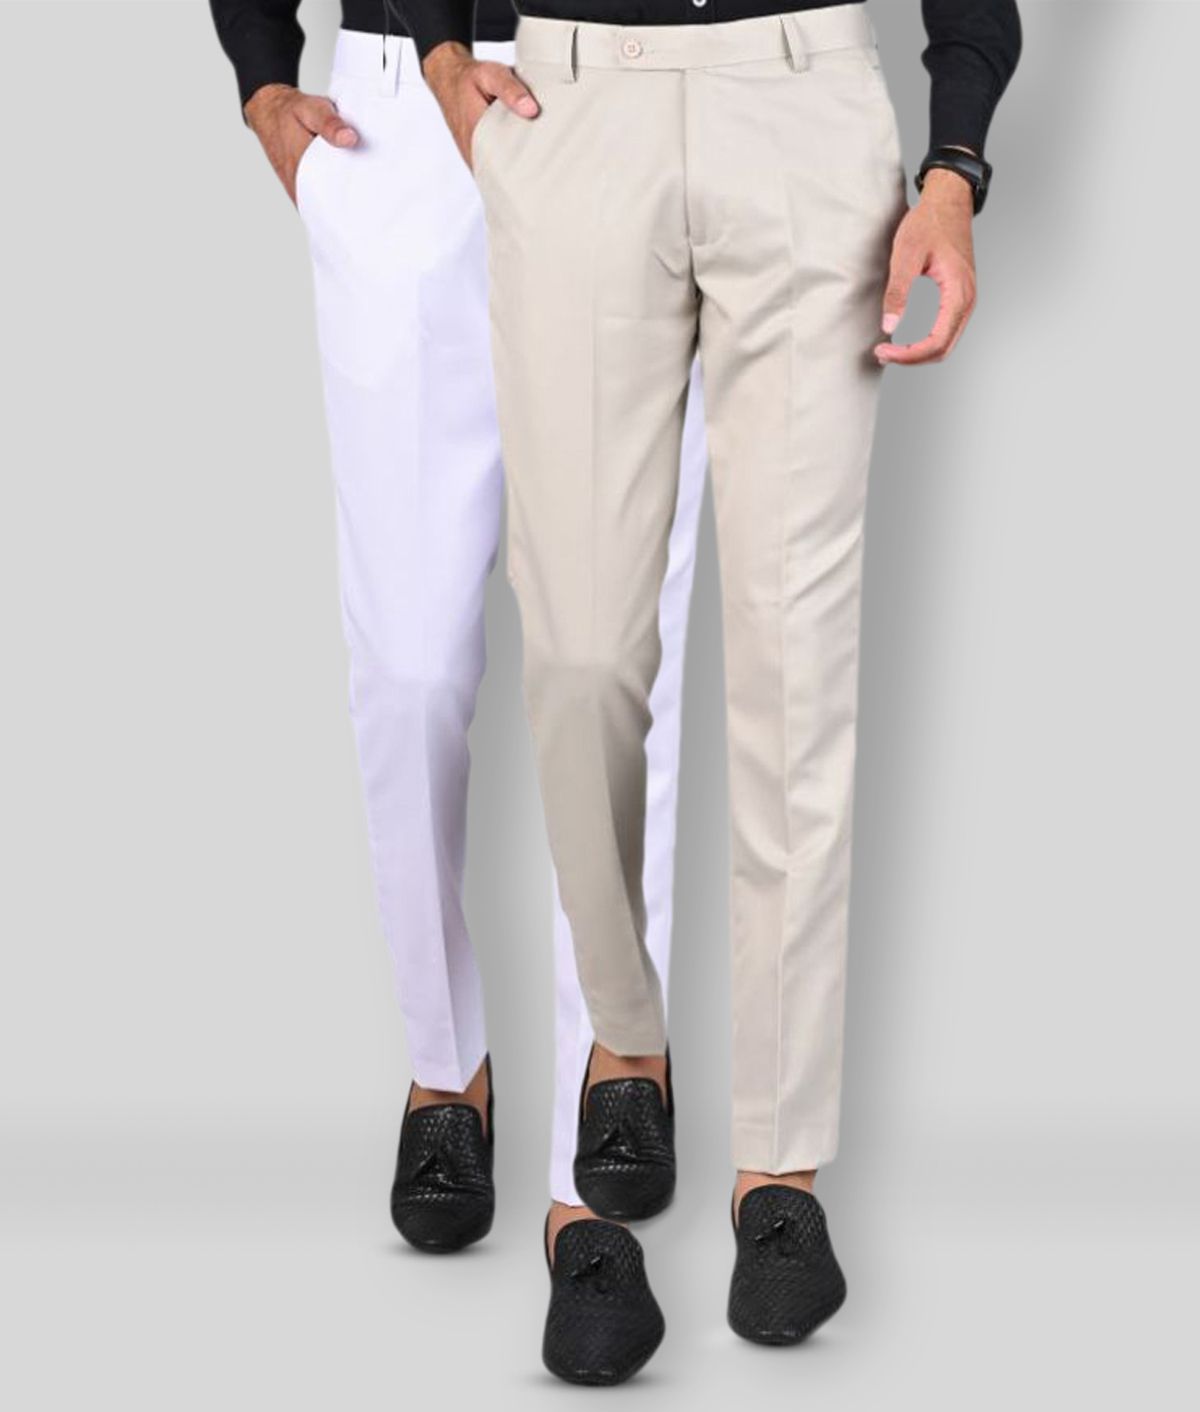     			MANCREW - Beige Polycotton Slim - Fit Men's Formal Pants ( Pack of 2 )